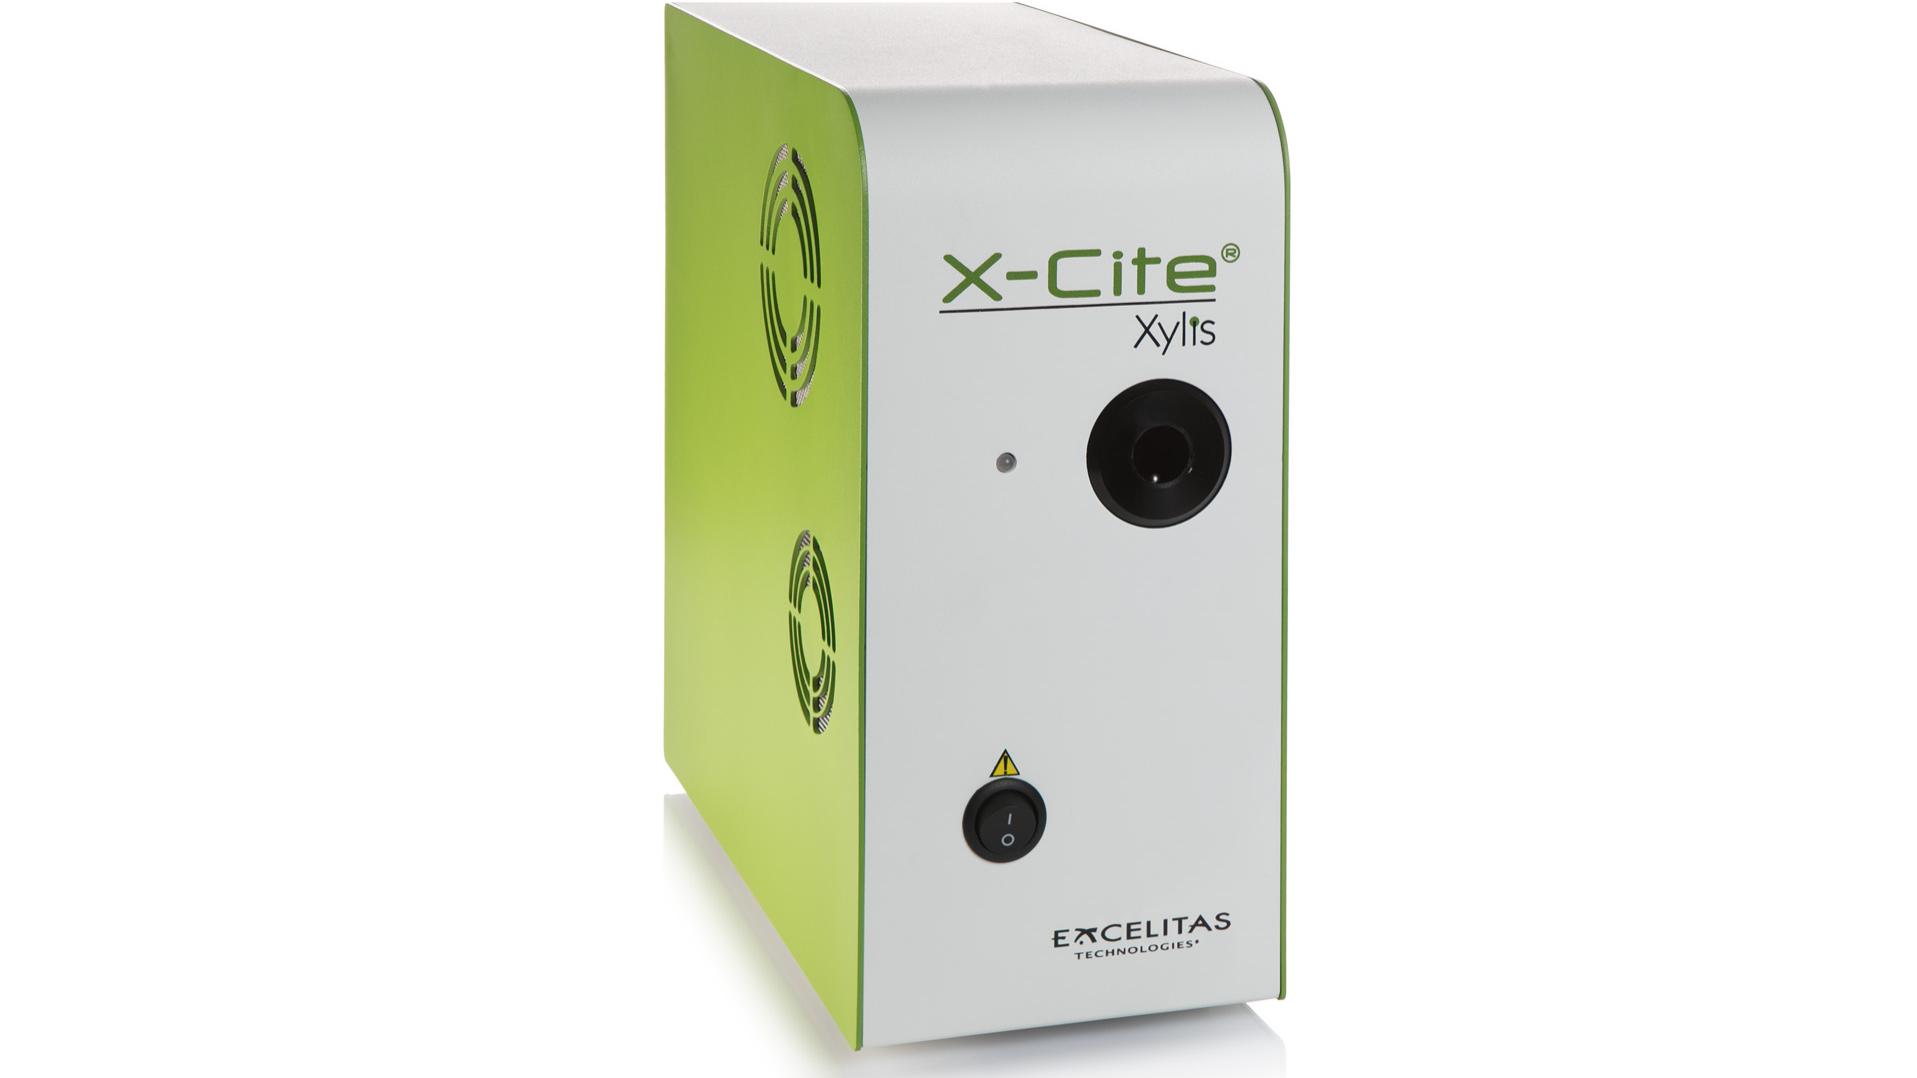 X-Cite Xylis – White light LED light source